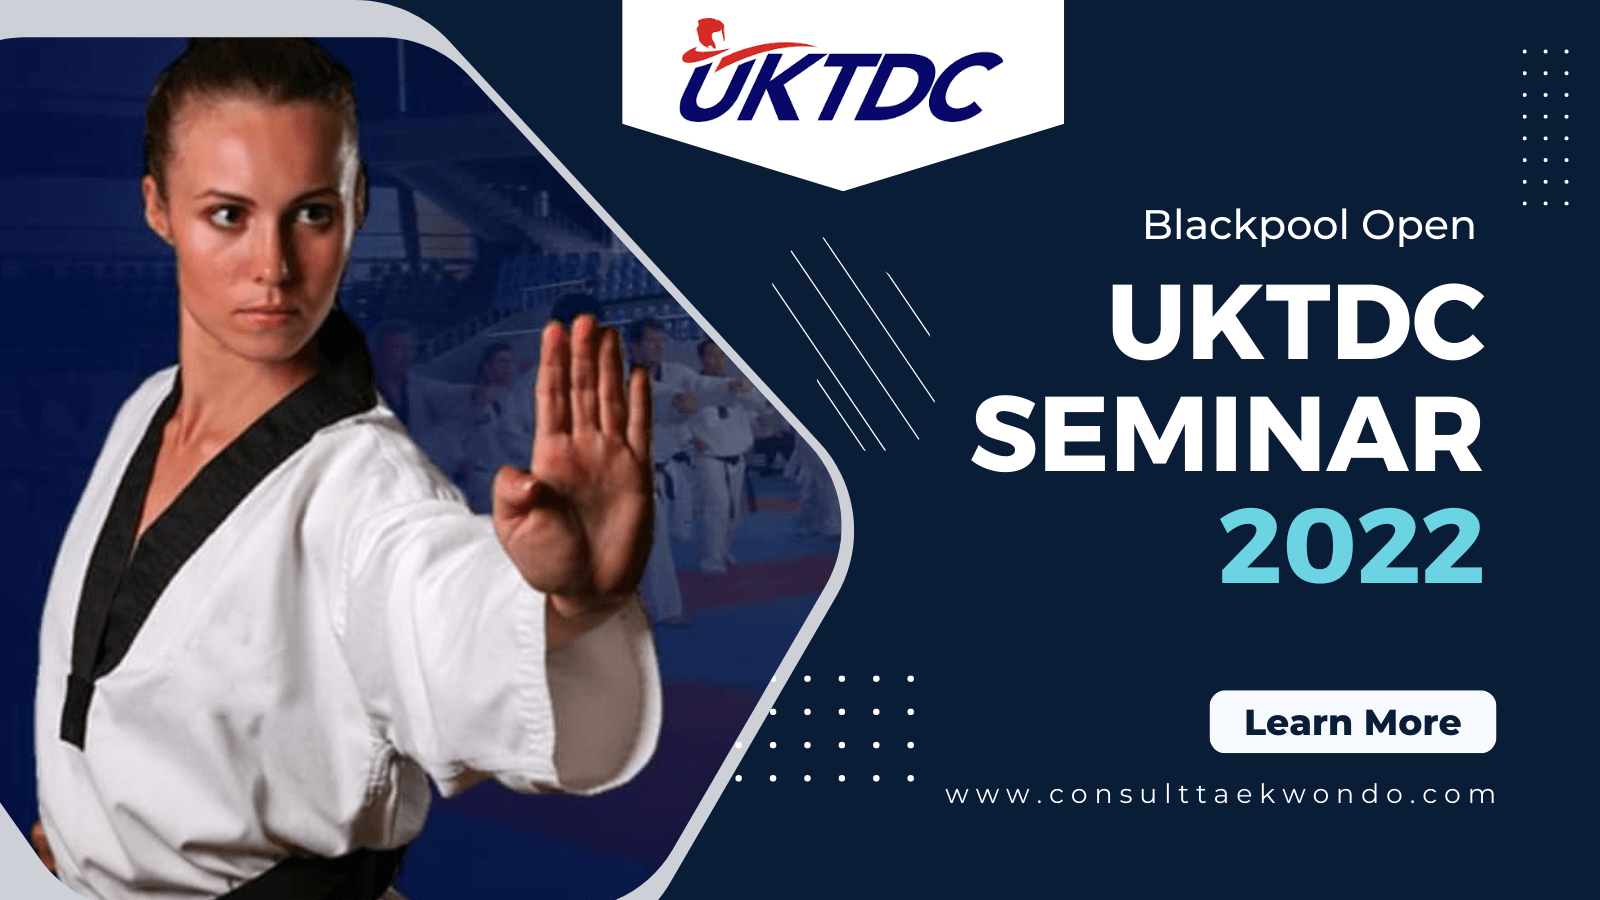 UKTDC SEMINAR 2022 - BLACKPOOL.